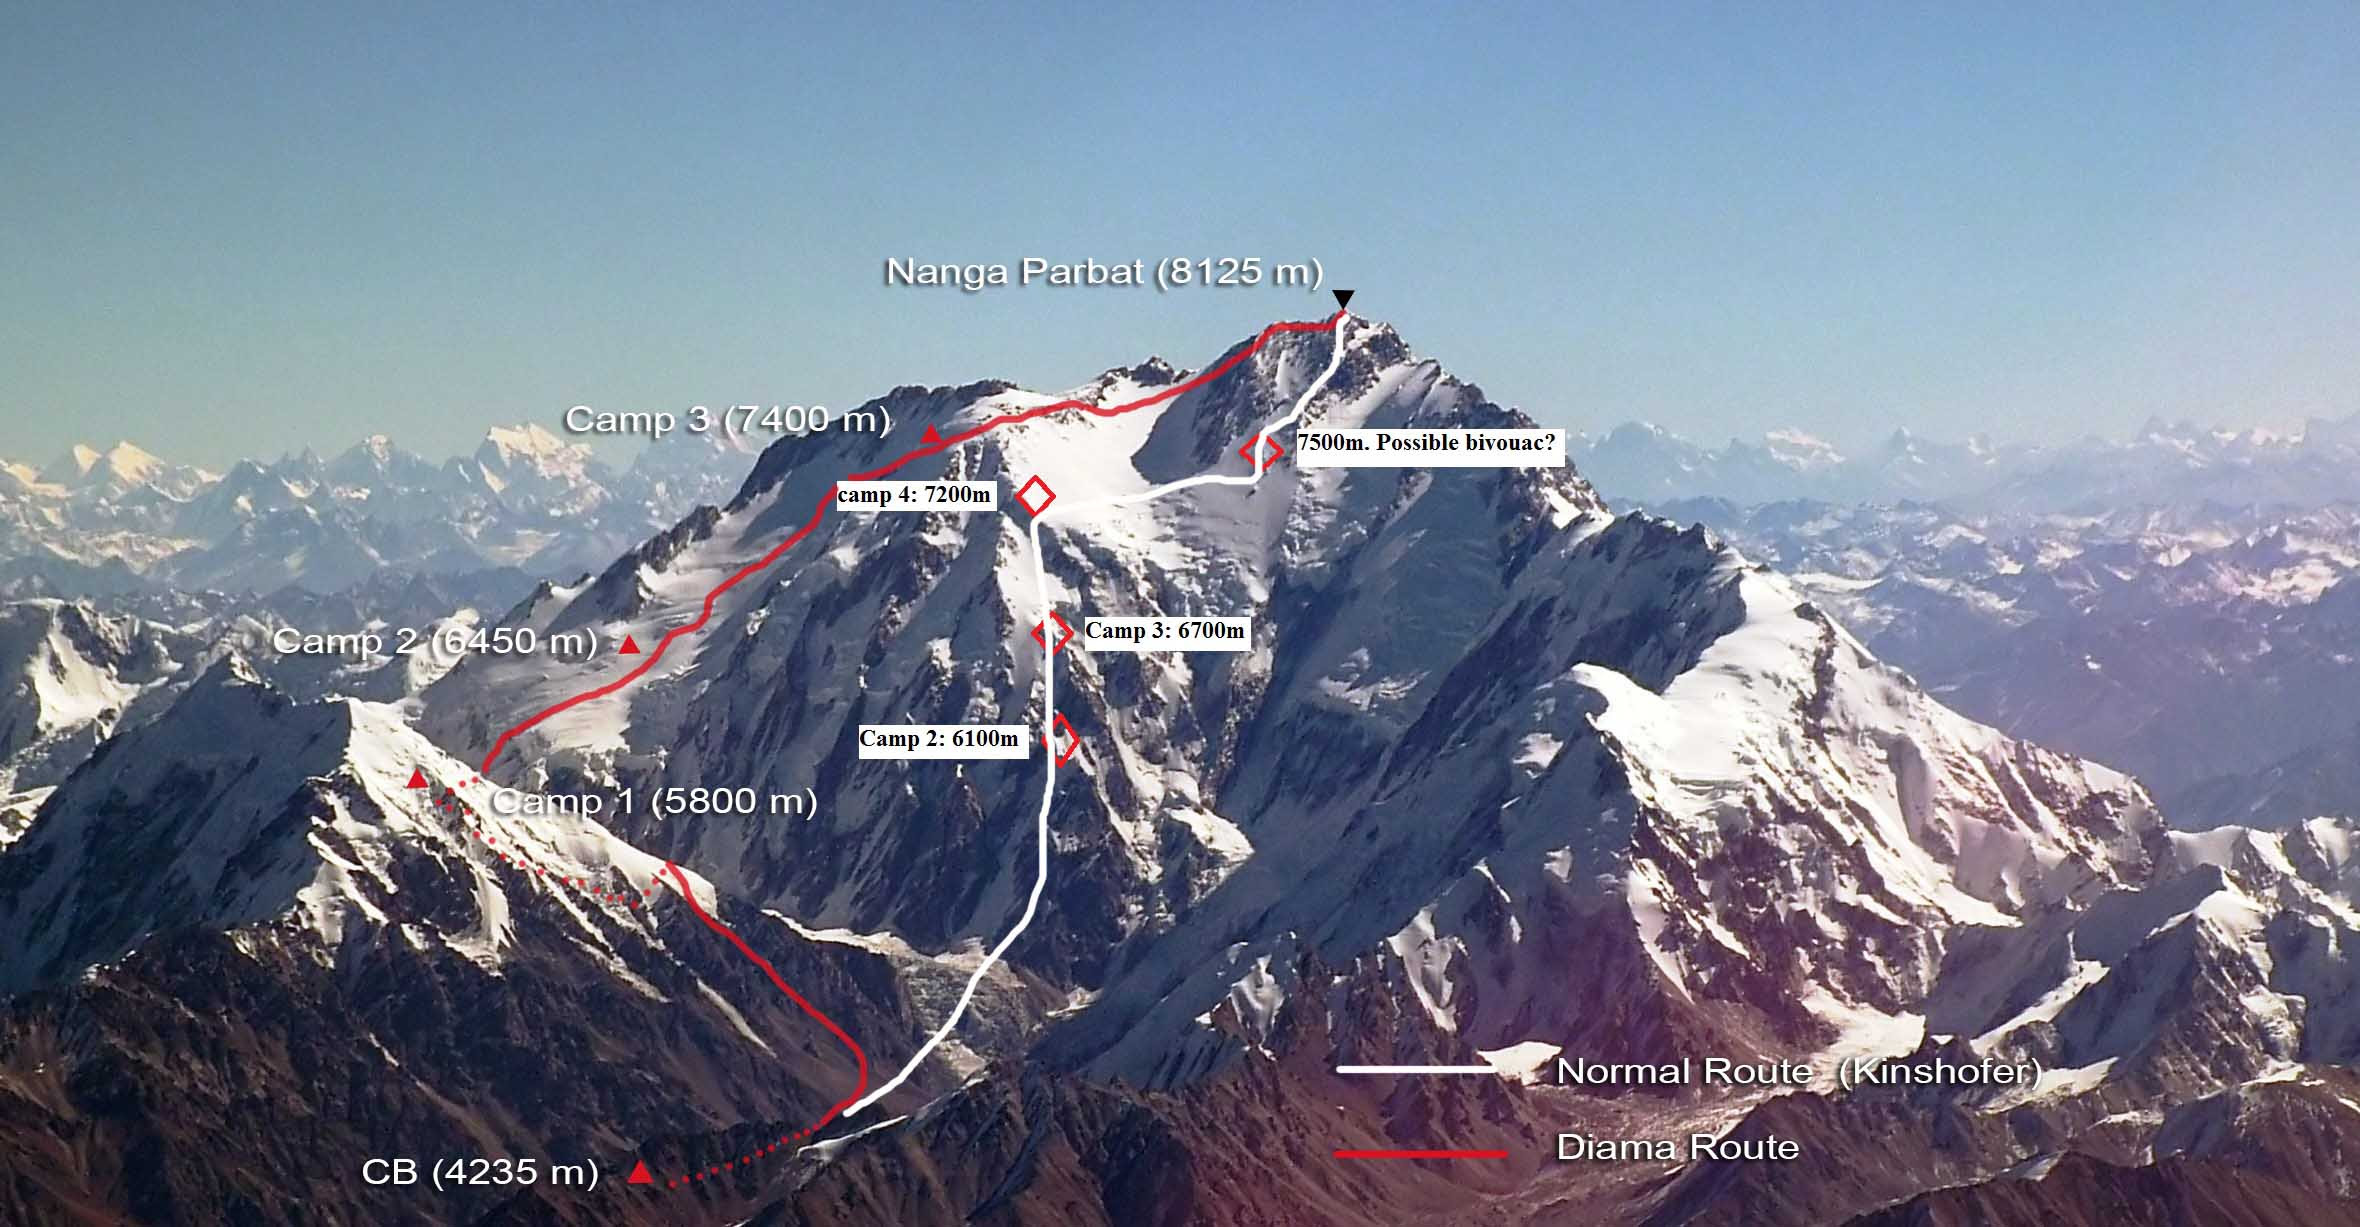 Nanga Parbat New Route Attempt Has Commenced Explorersweb